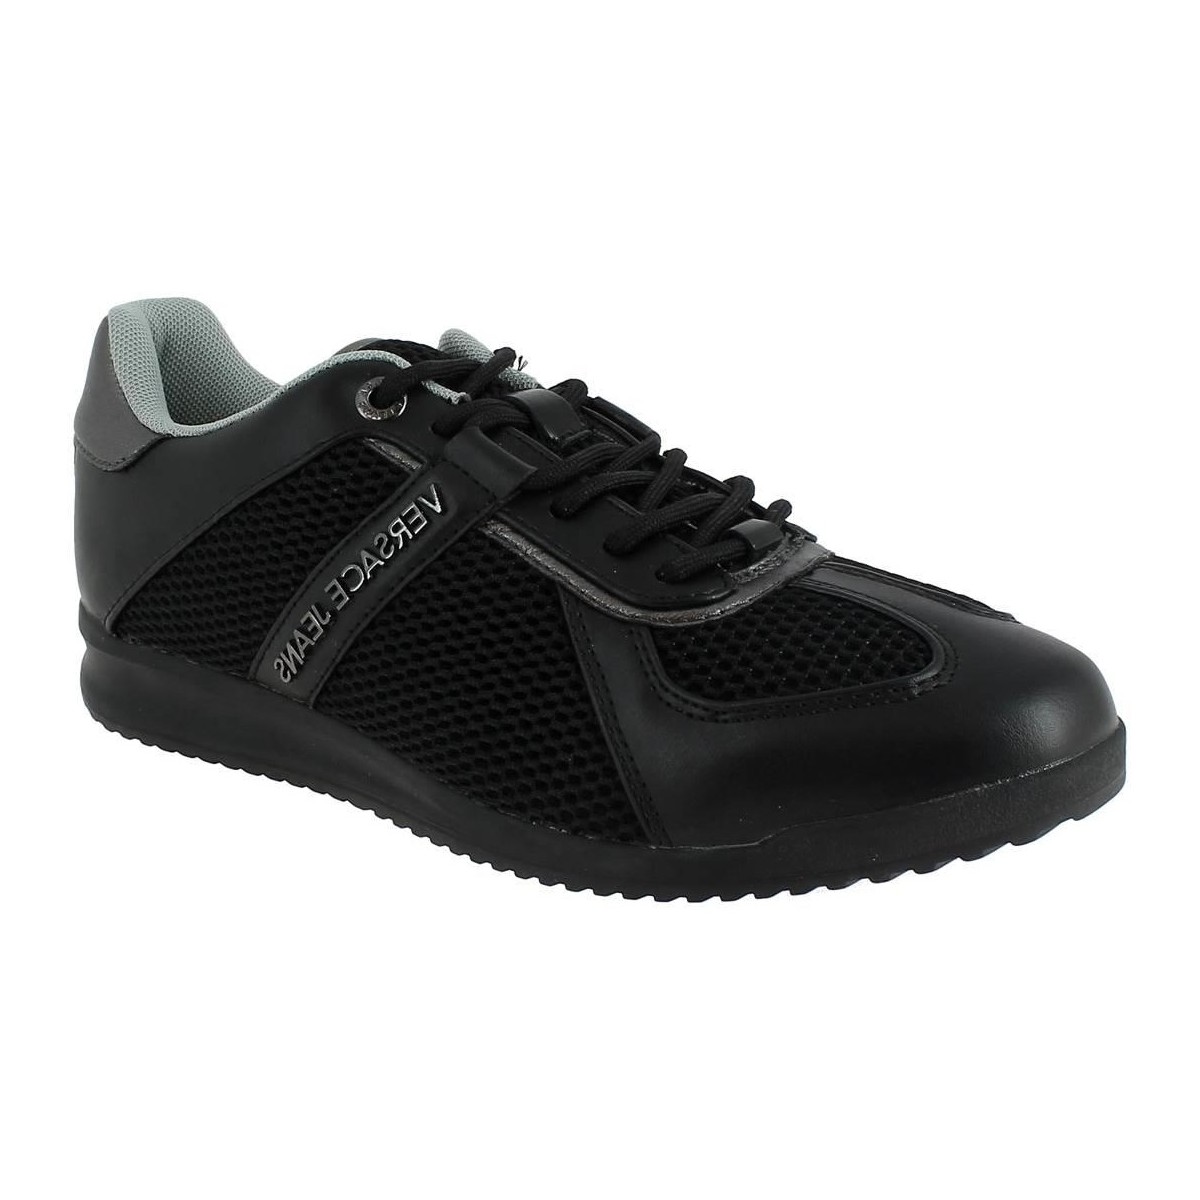 Chaussures Homme Finition : velours, nubuck E0YPBSB2 Noir